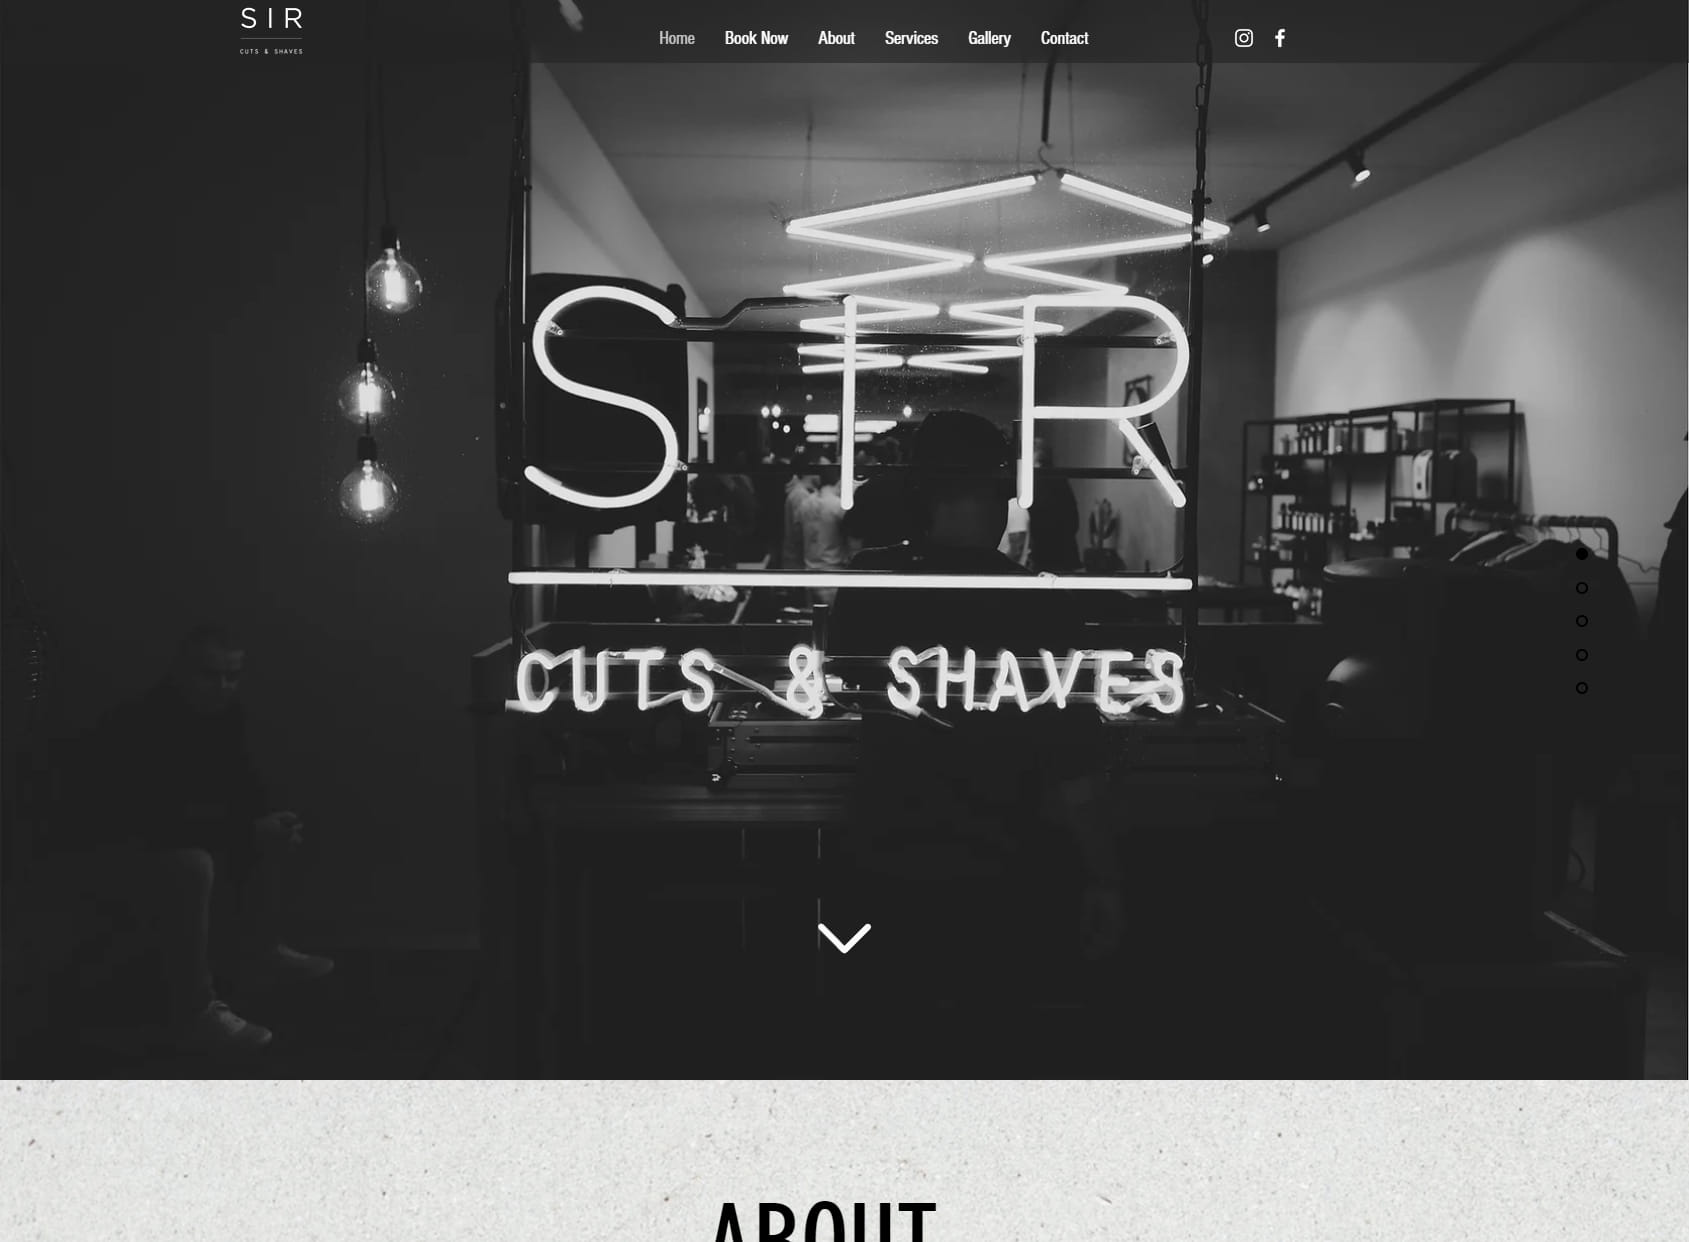 SIR Cuts & Shaves